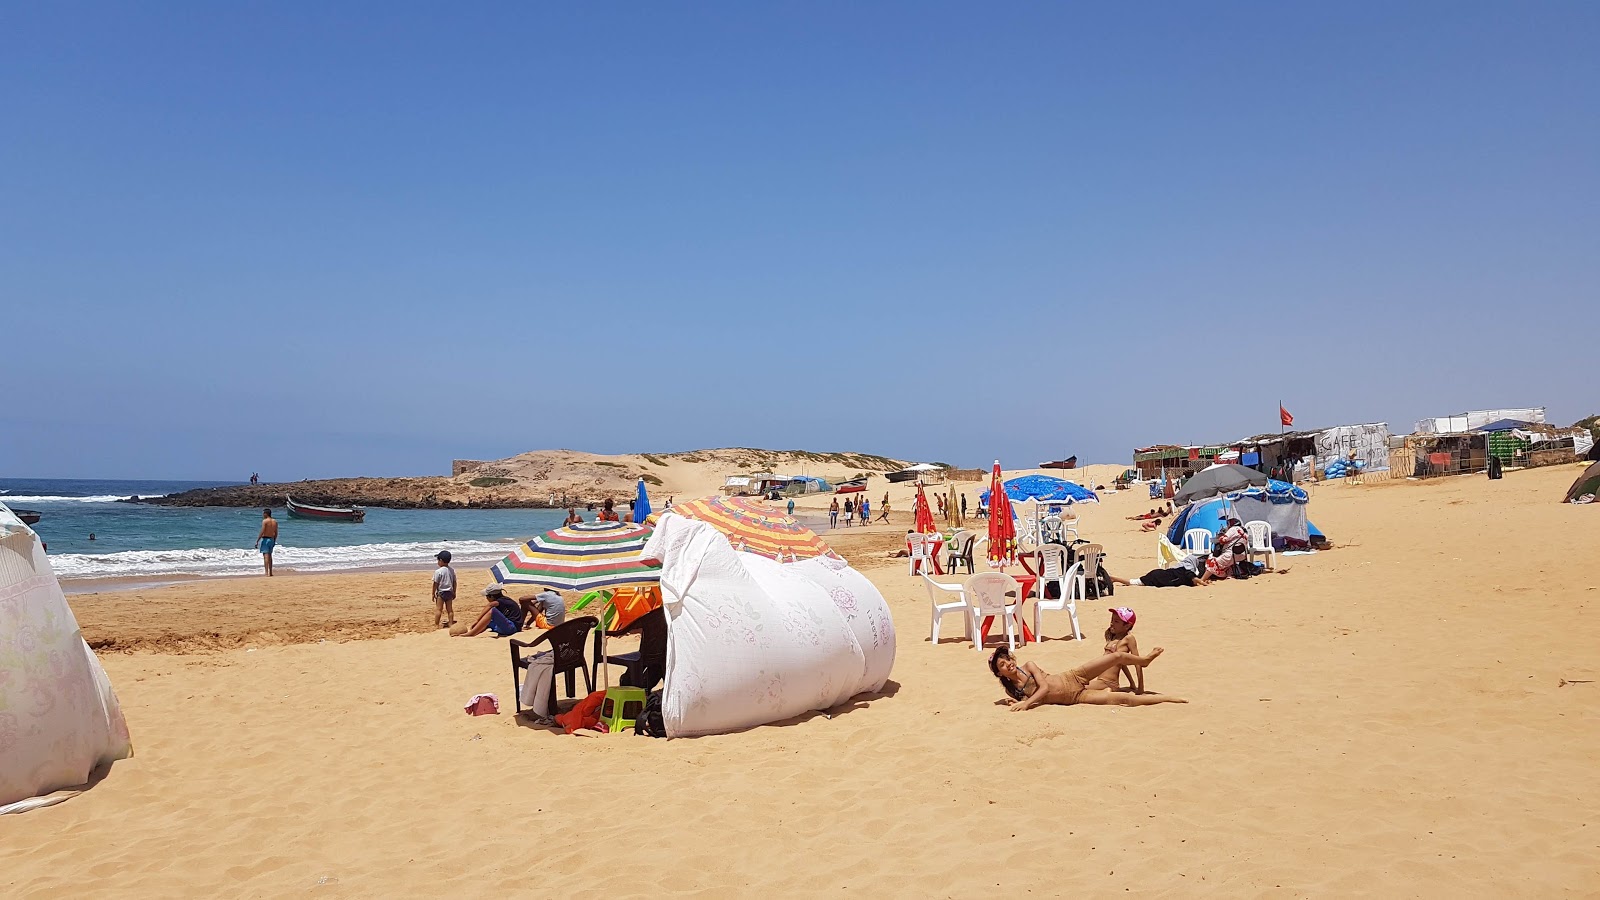 Photo of Sidi Belkheir Beach shaty sydy balkhyr located in natural area